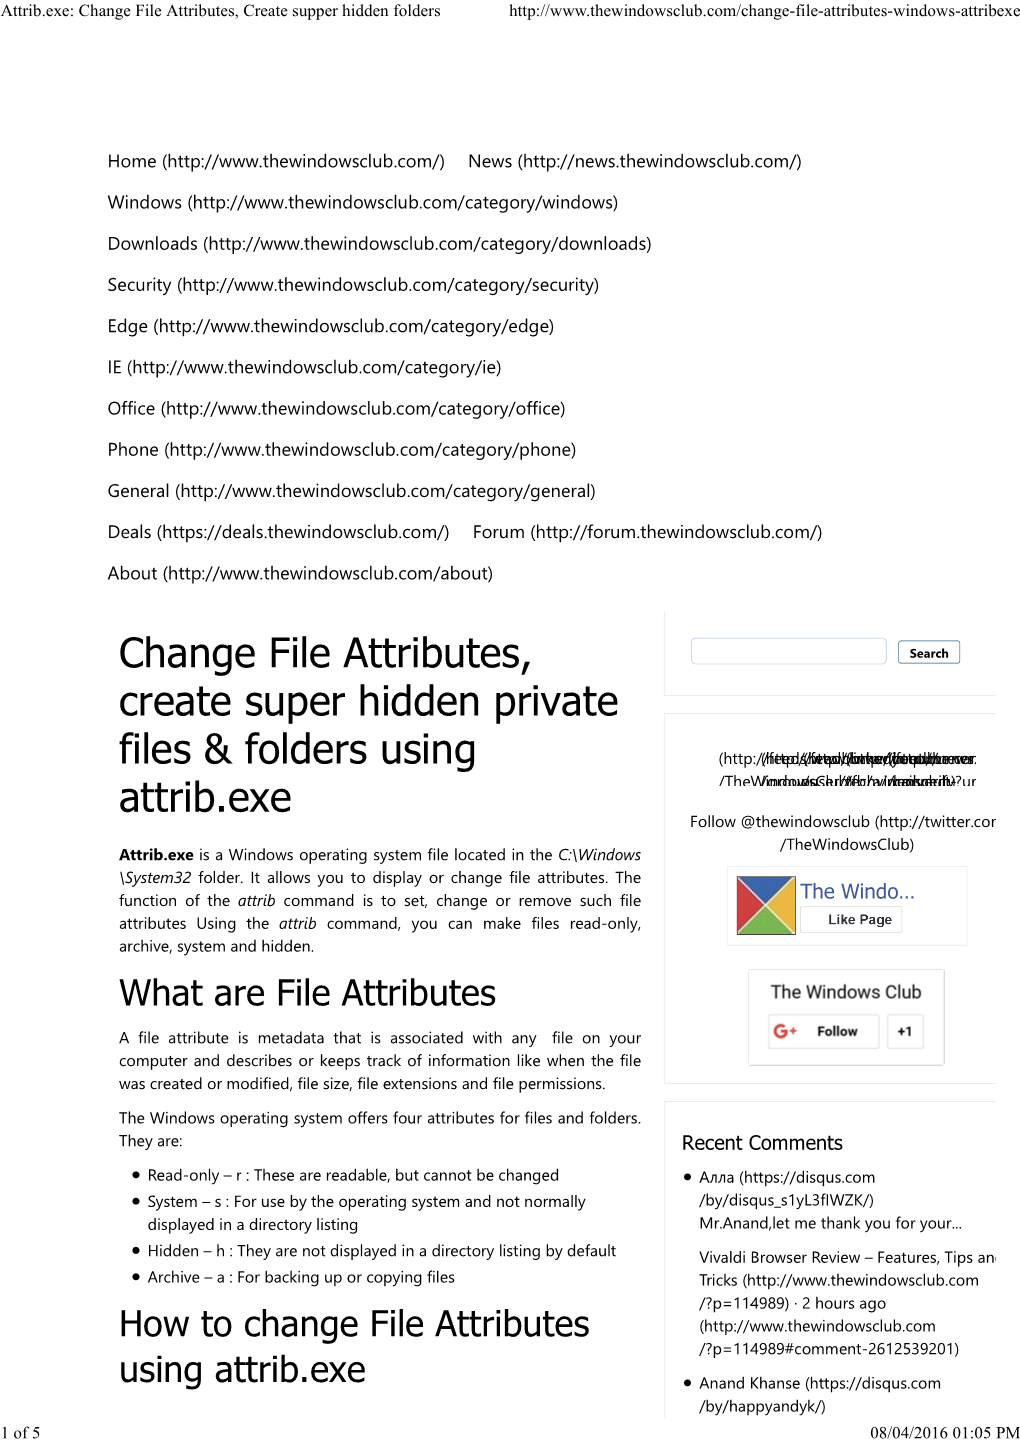 Attrib.Exe: Change File Attributes, Create Supper Hidden Folders